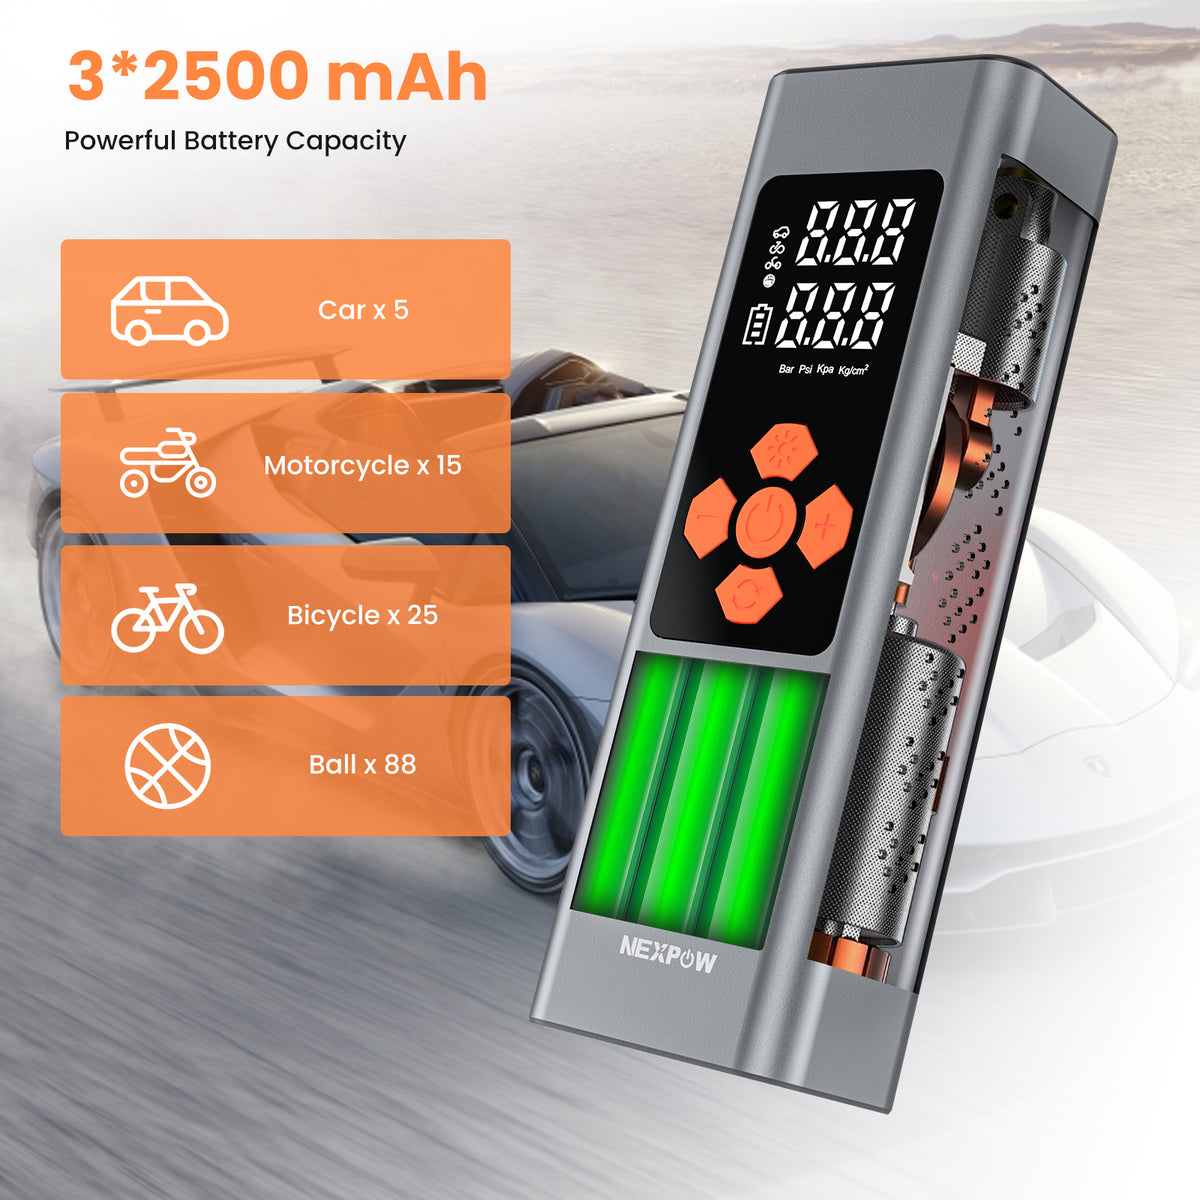 NEXPOW Auto Inflator Portable Air Compressor, Cordless 150PSI Car Air